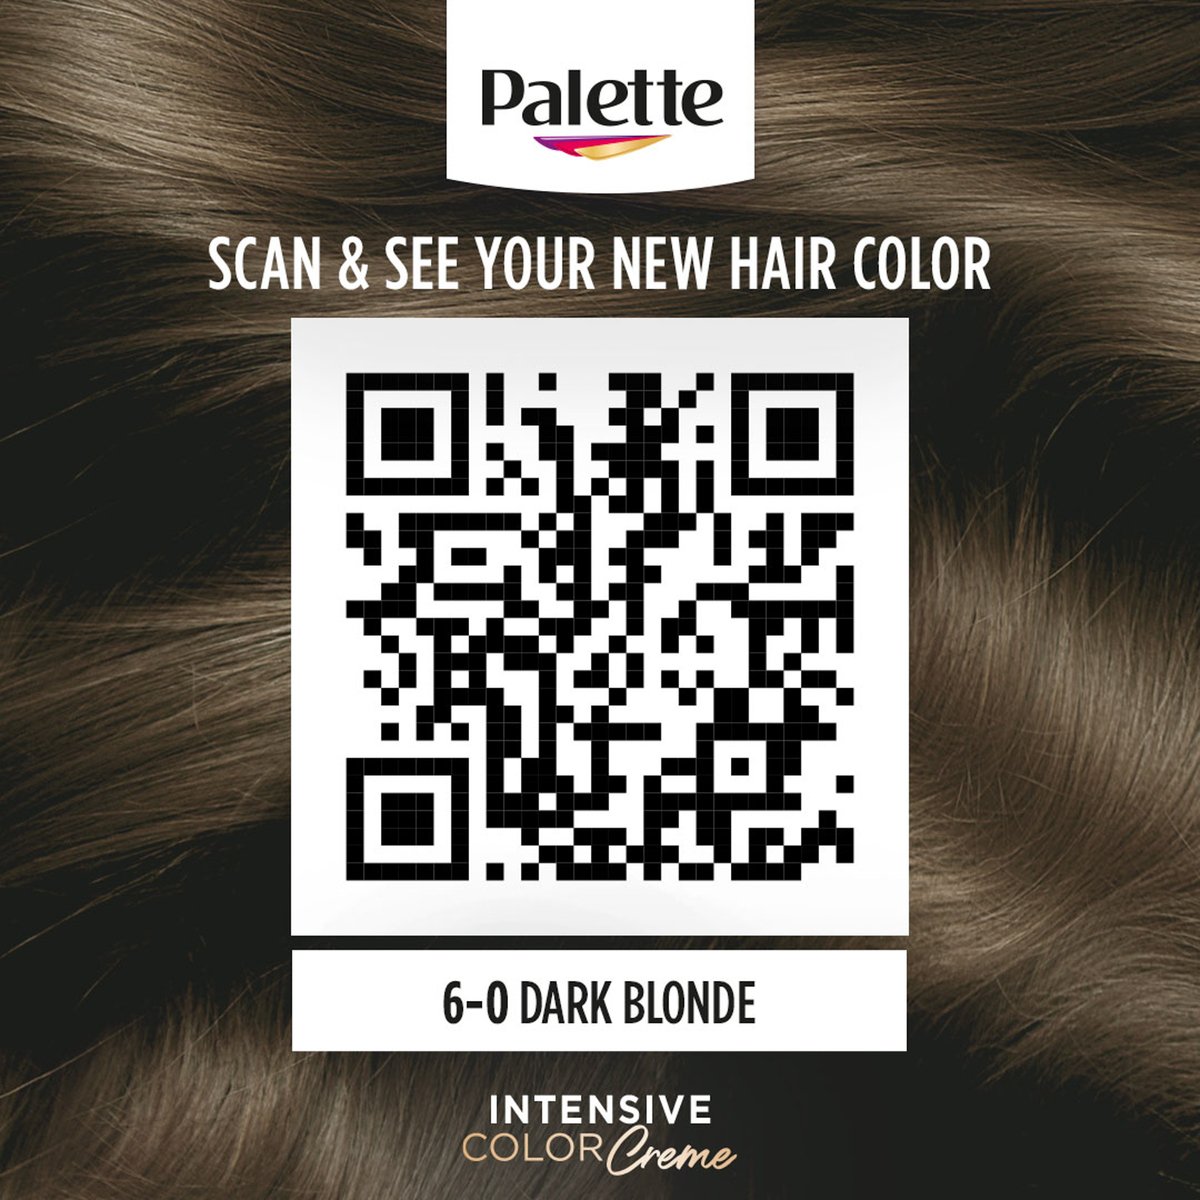 Palette Intensive Color Creme 6-0 Dark Blonde 1 pkt